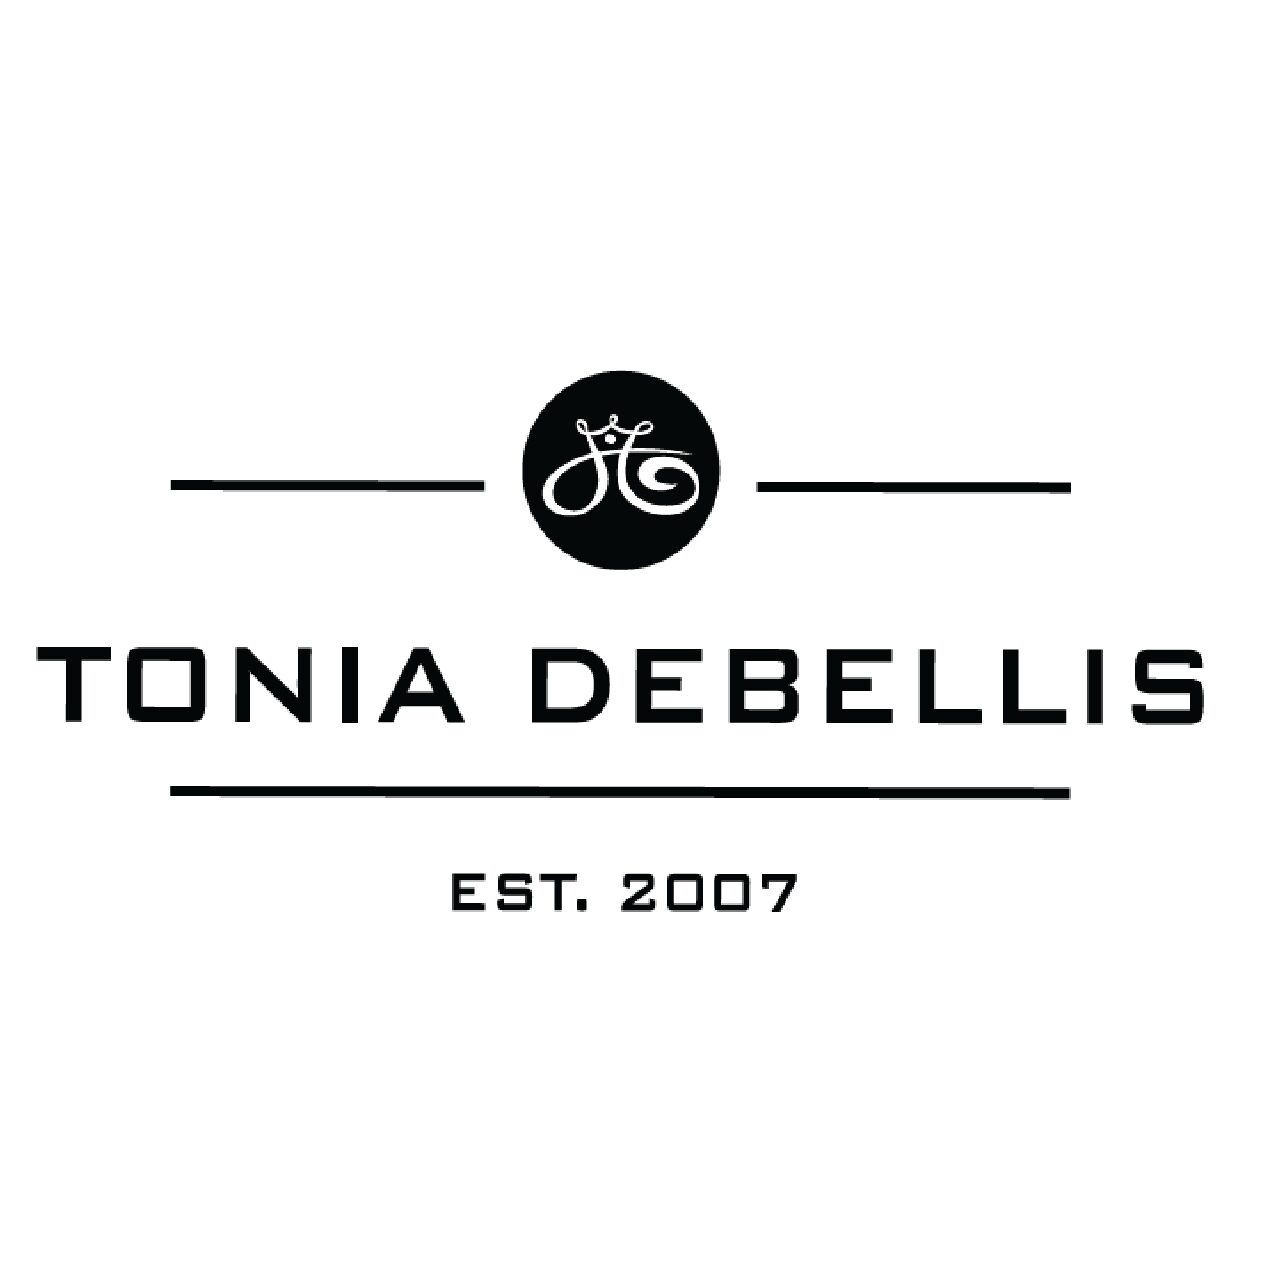 Tonia DeBellis